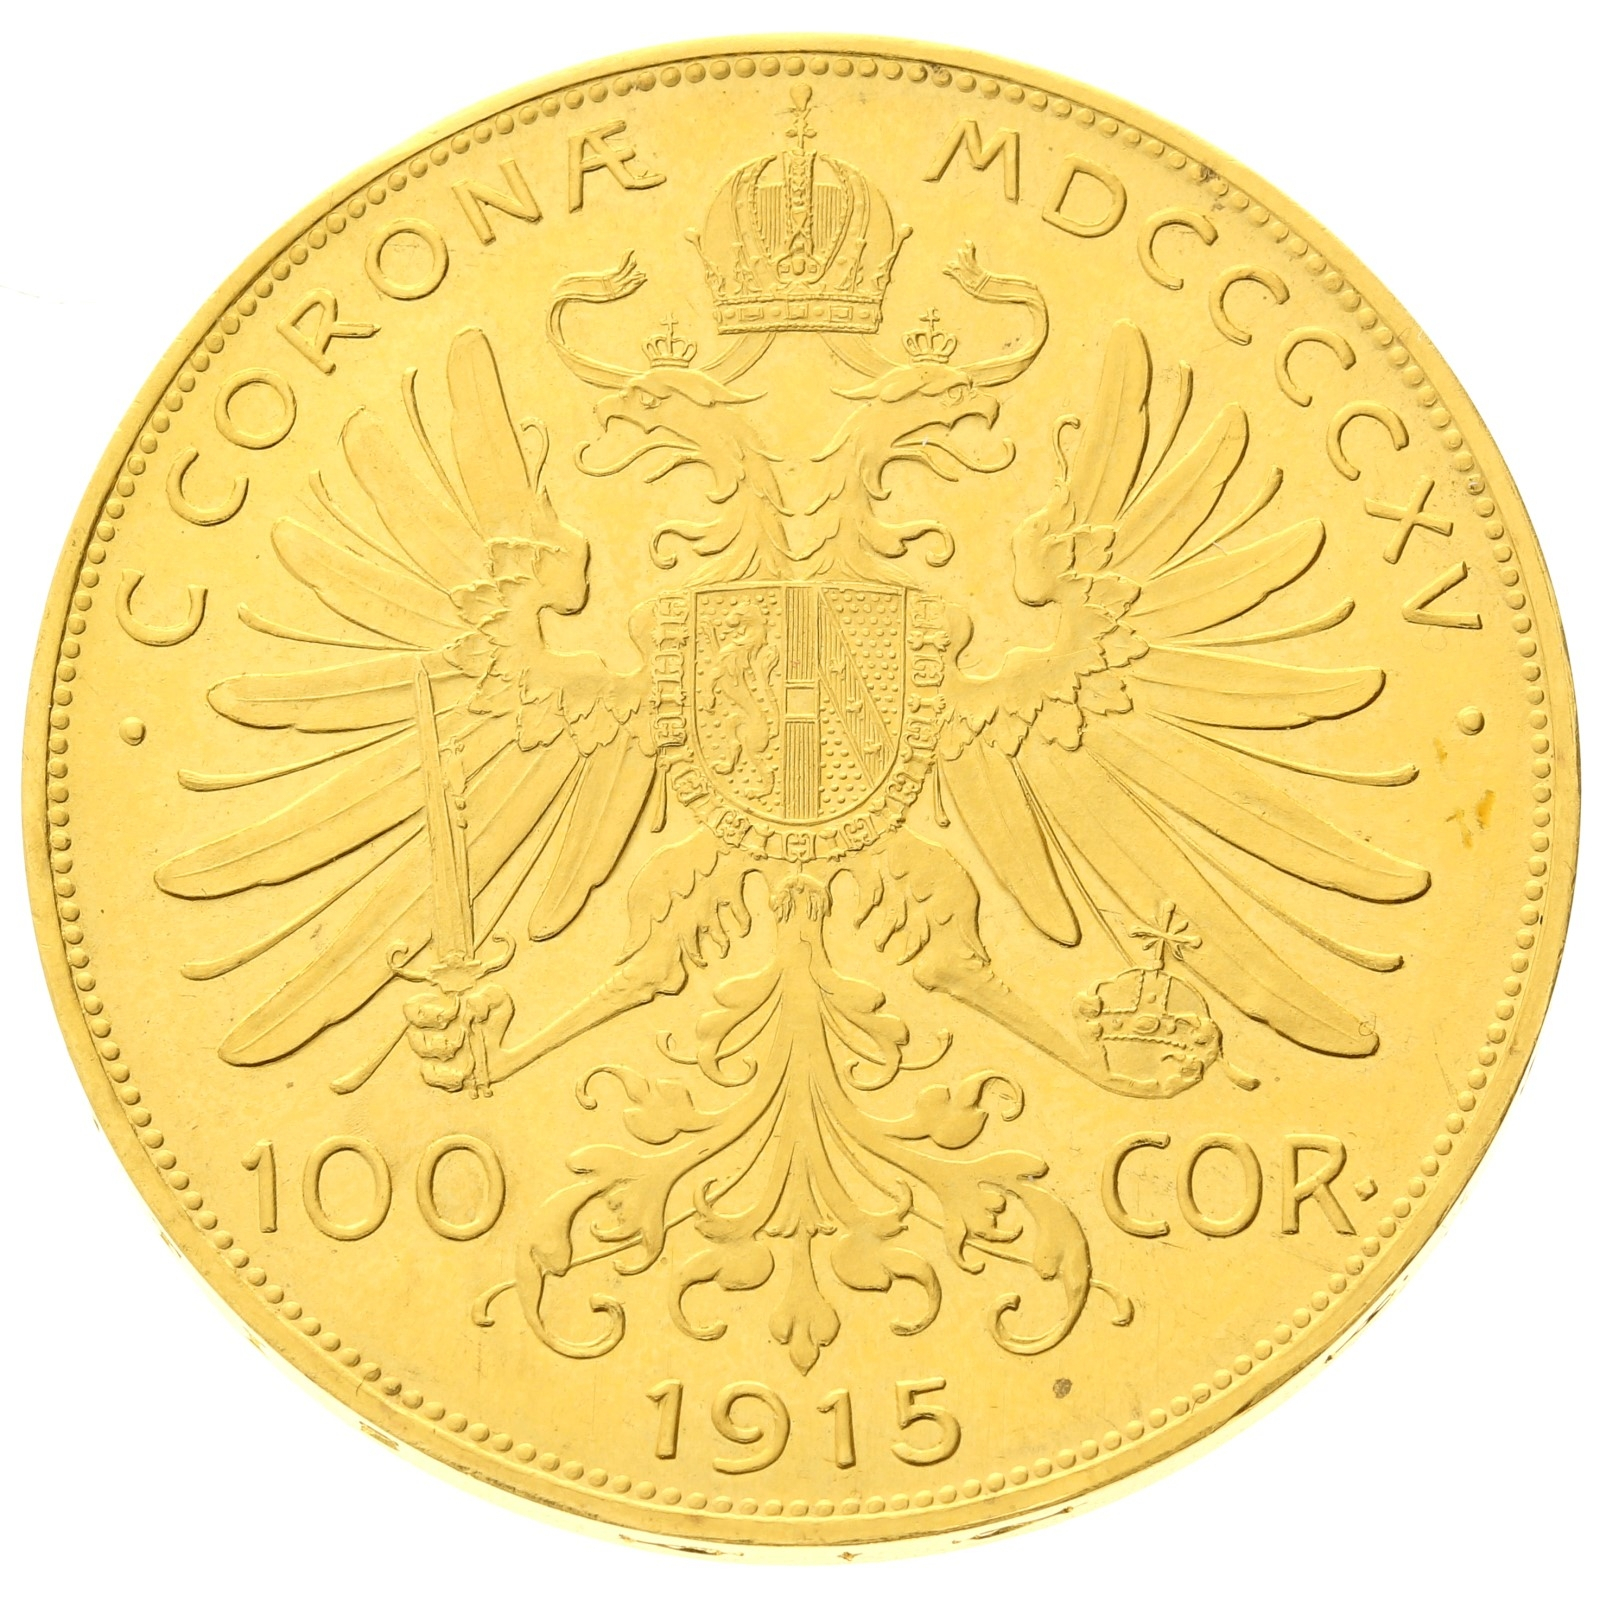 Austria - 100 Corona - 1915 - Franz Joseph I - RESTRIKE 